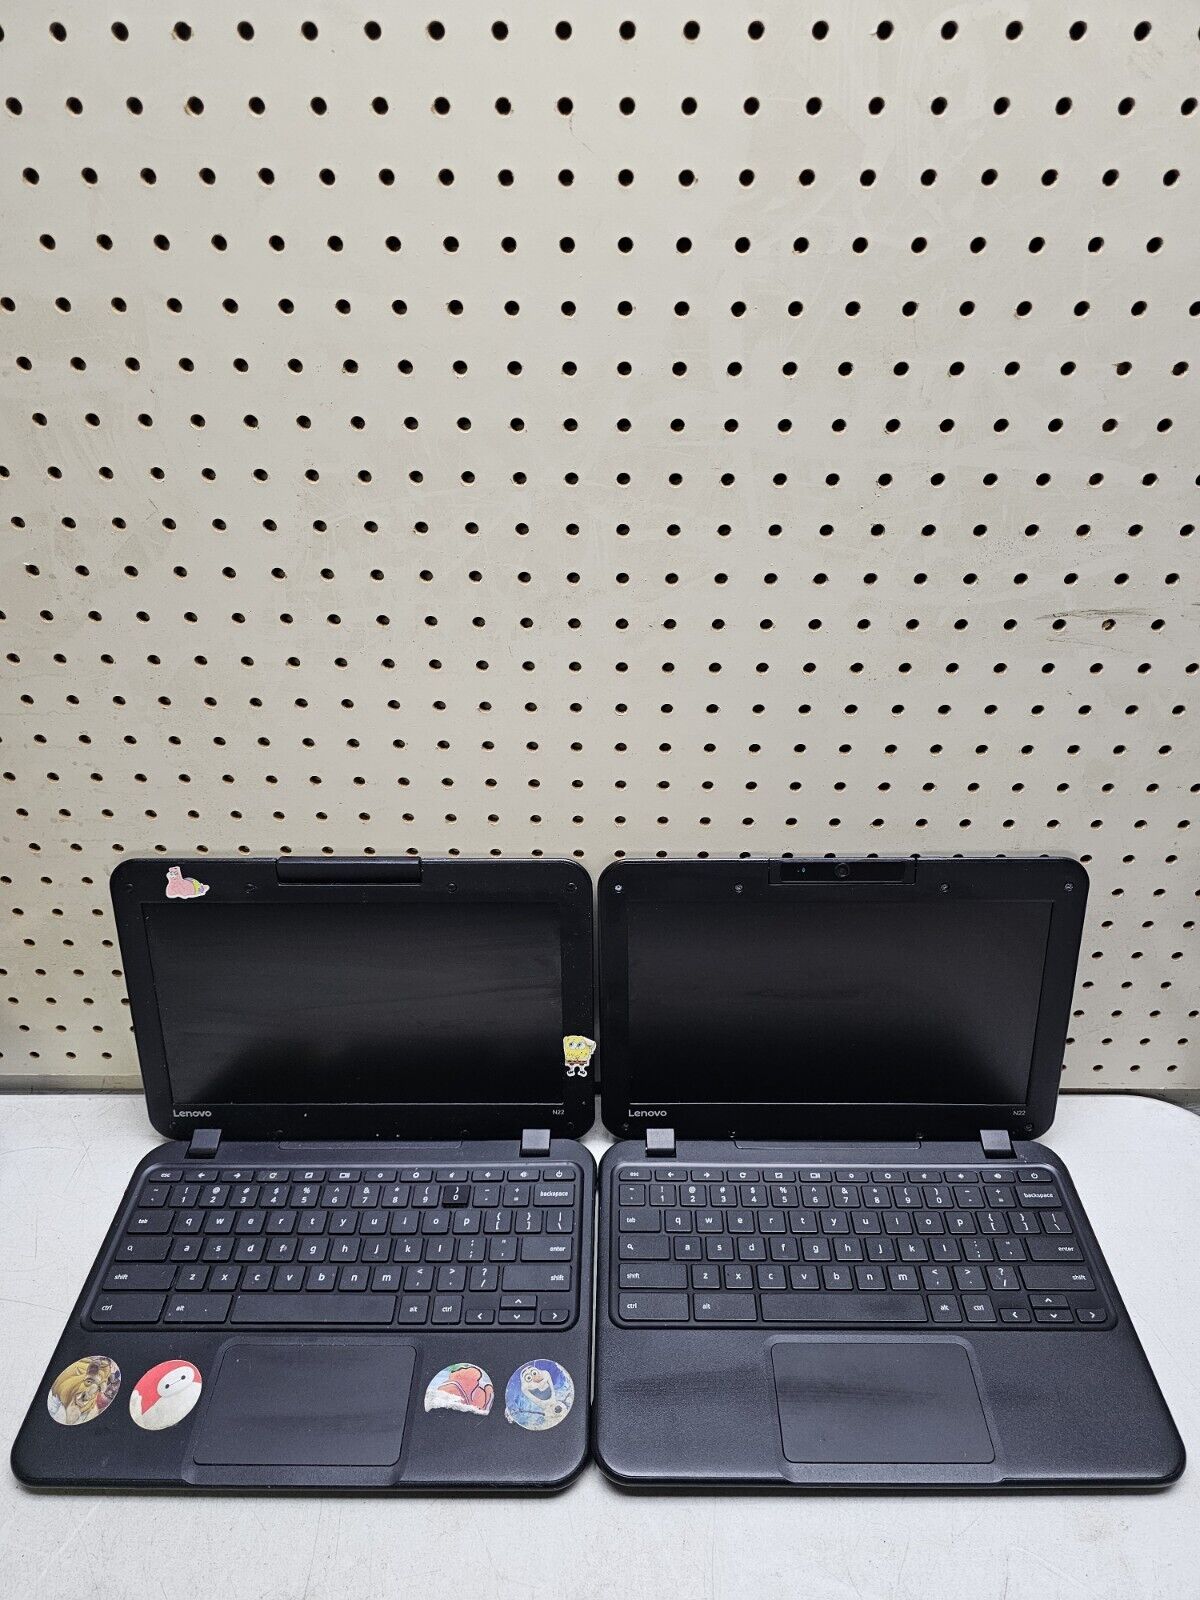 Lot of 2 Lenovo N22 Chromebook Laptops - Intel Celeron N3060 - 4GB RAM - READ